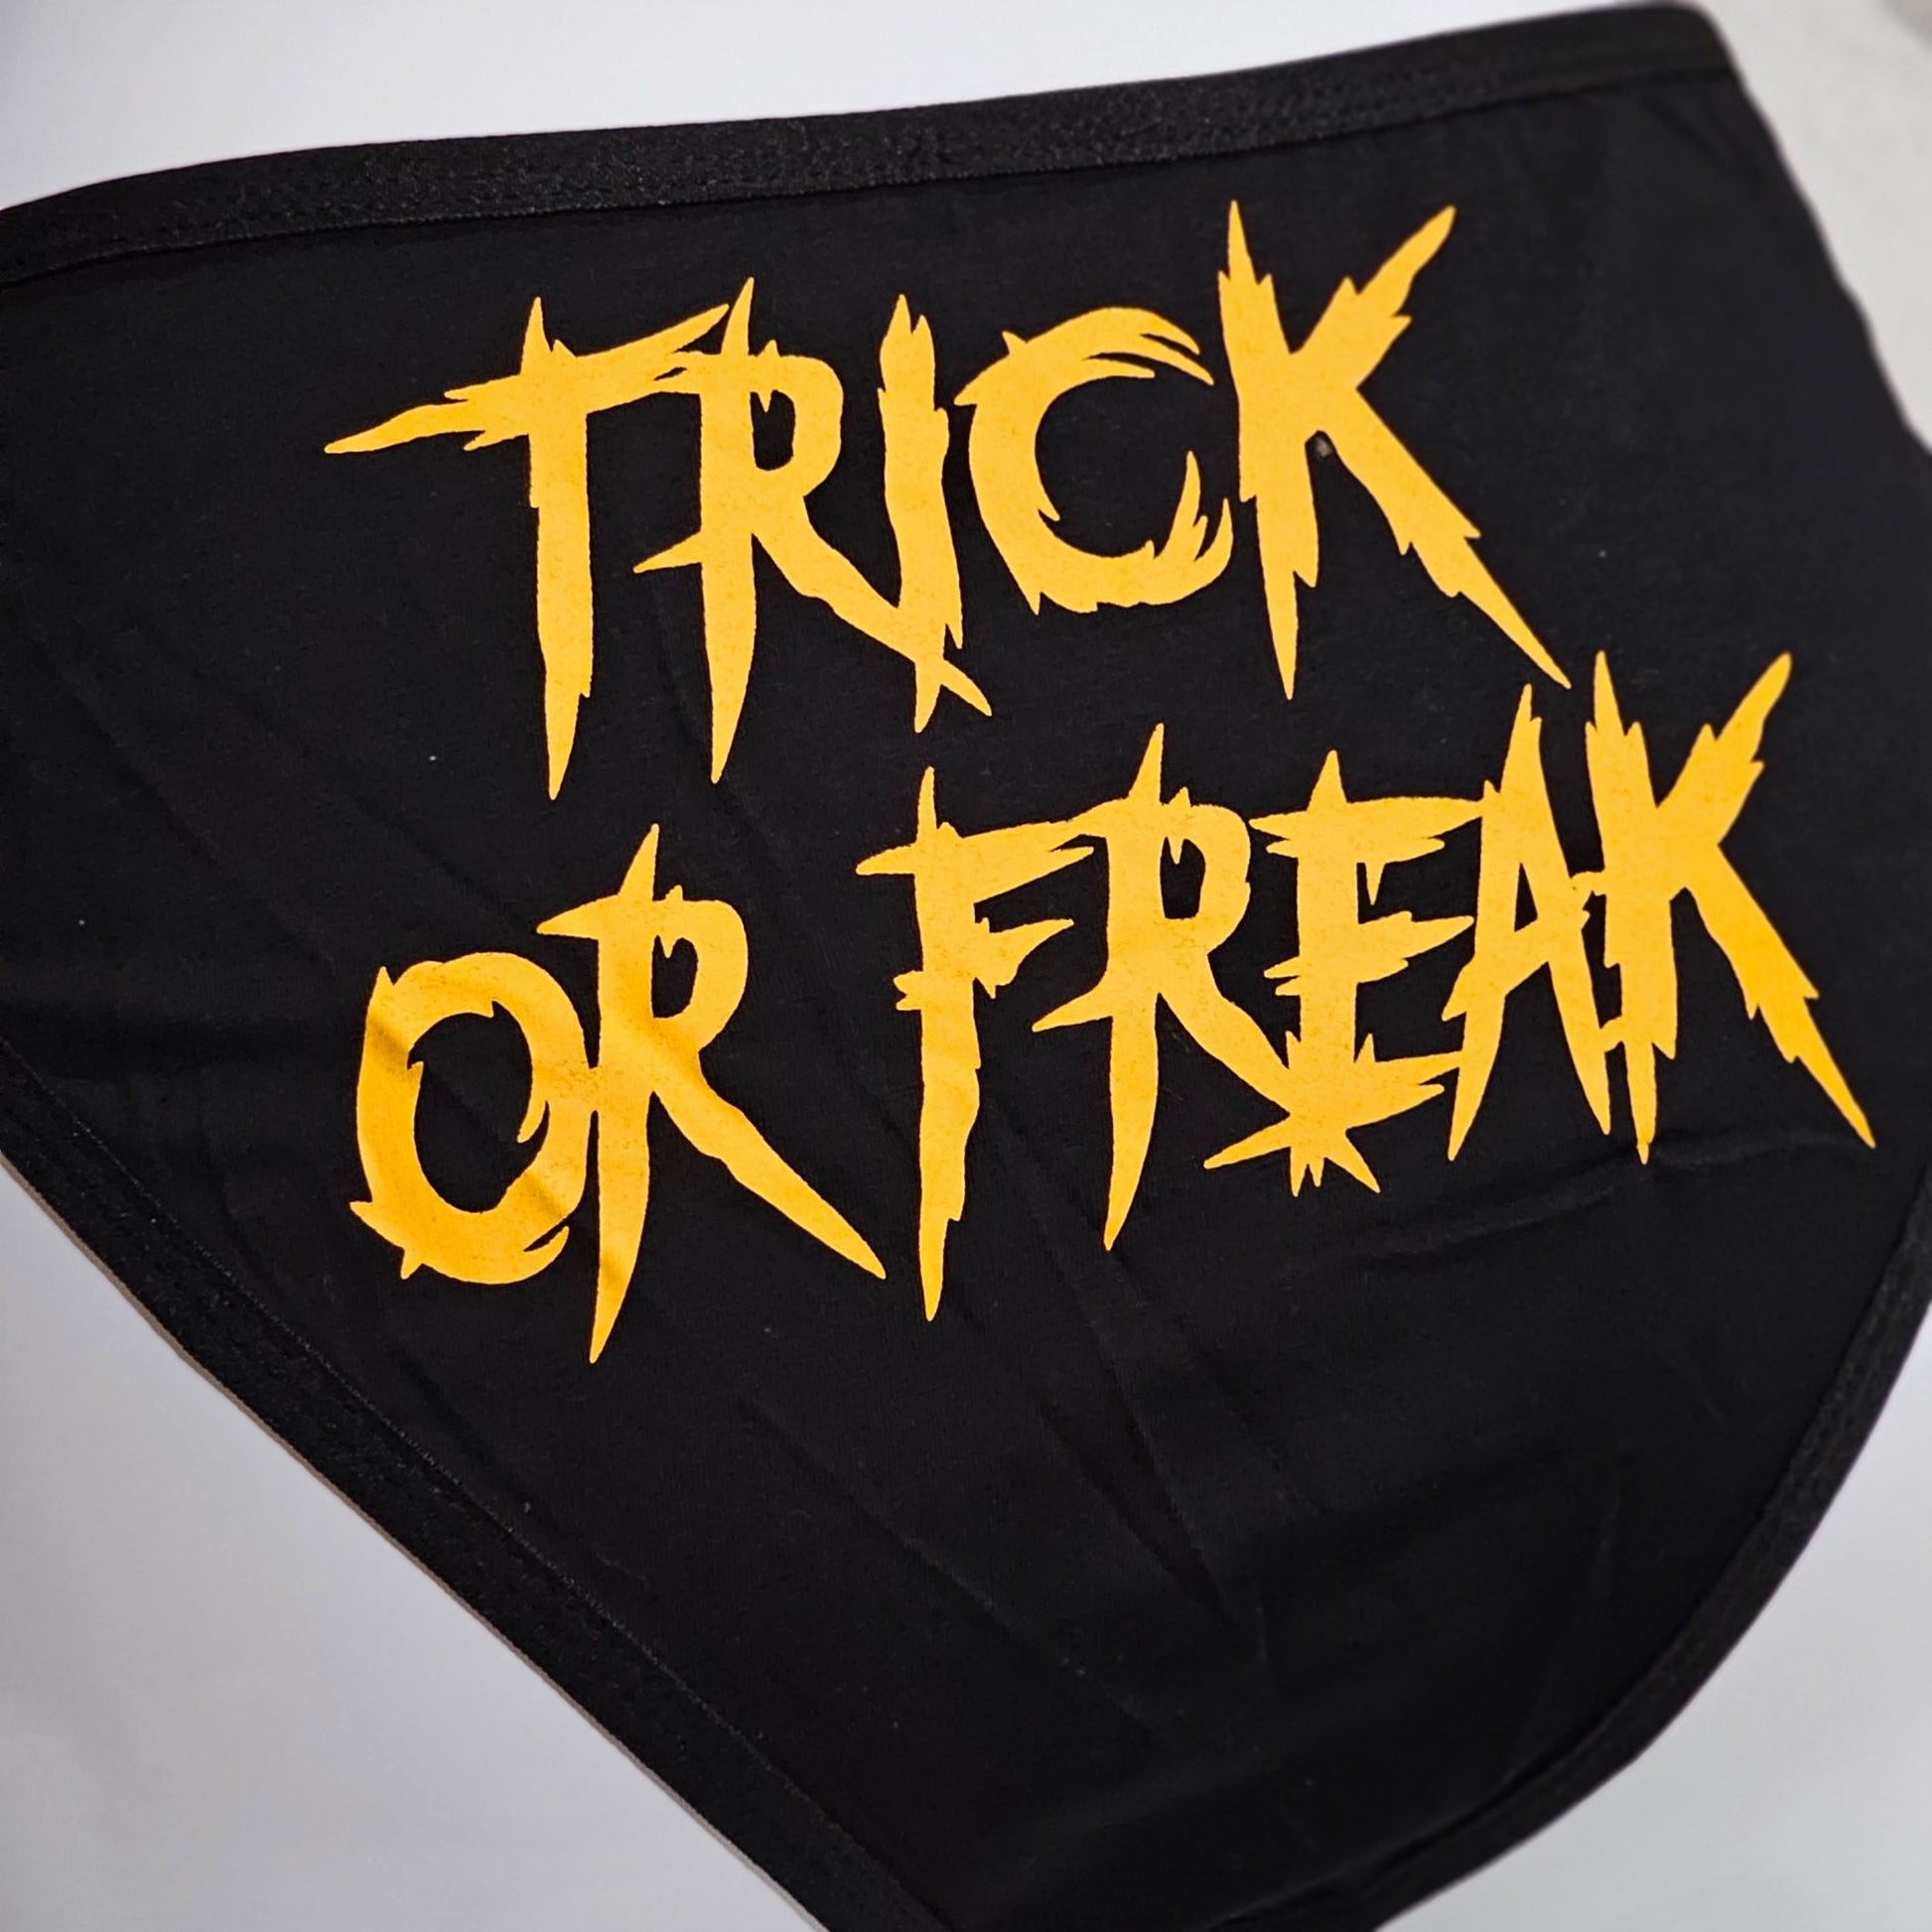 Freaky Strappy Bra & Panty Set | Gothic Black & Orange Creepy Graphics Cotton Blend - Trickz N Treatz - Bra & Panty